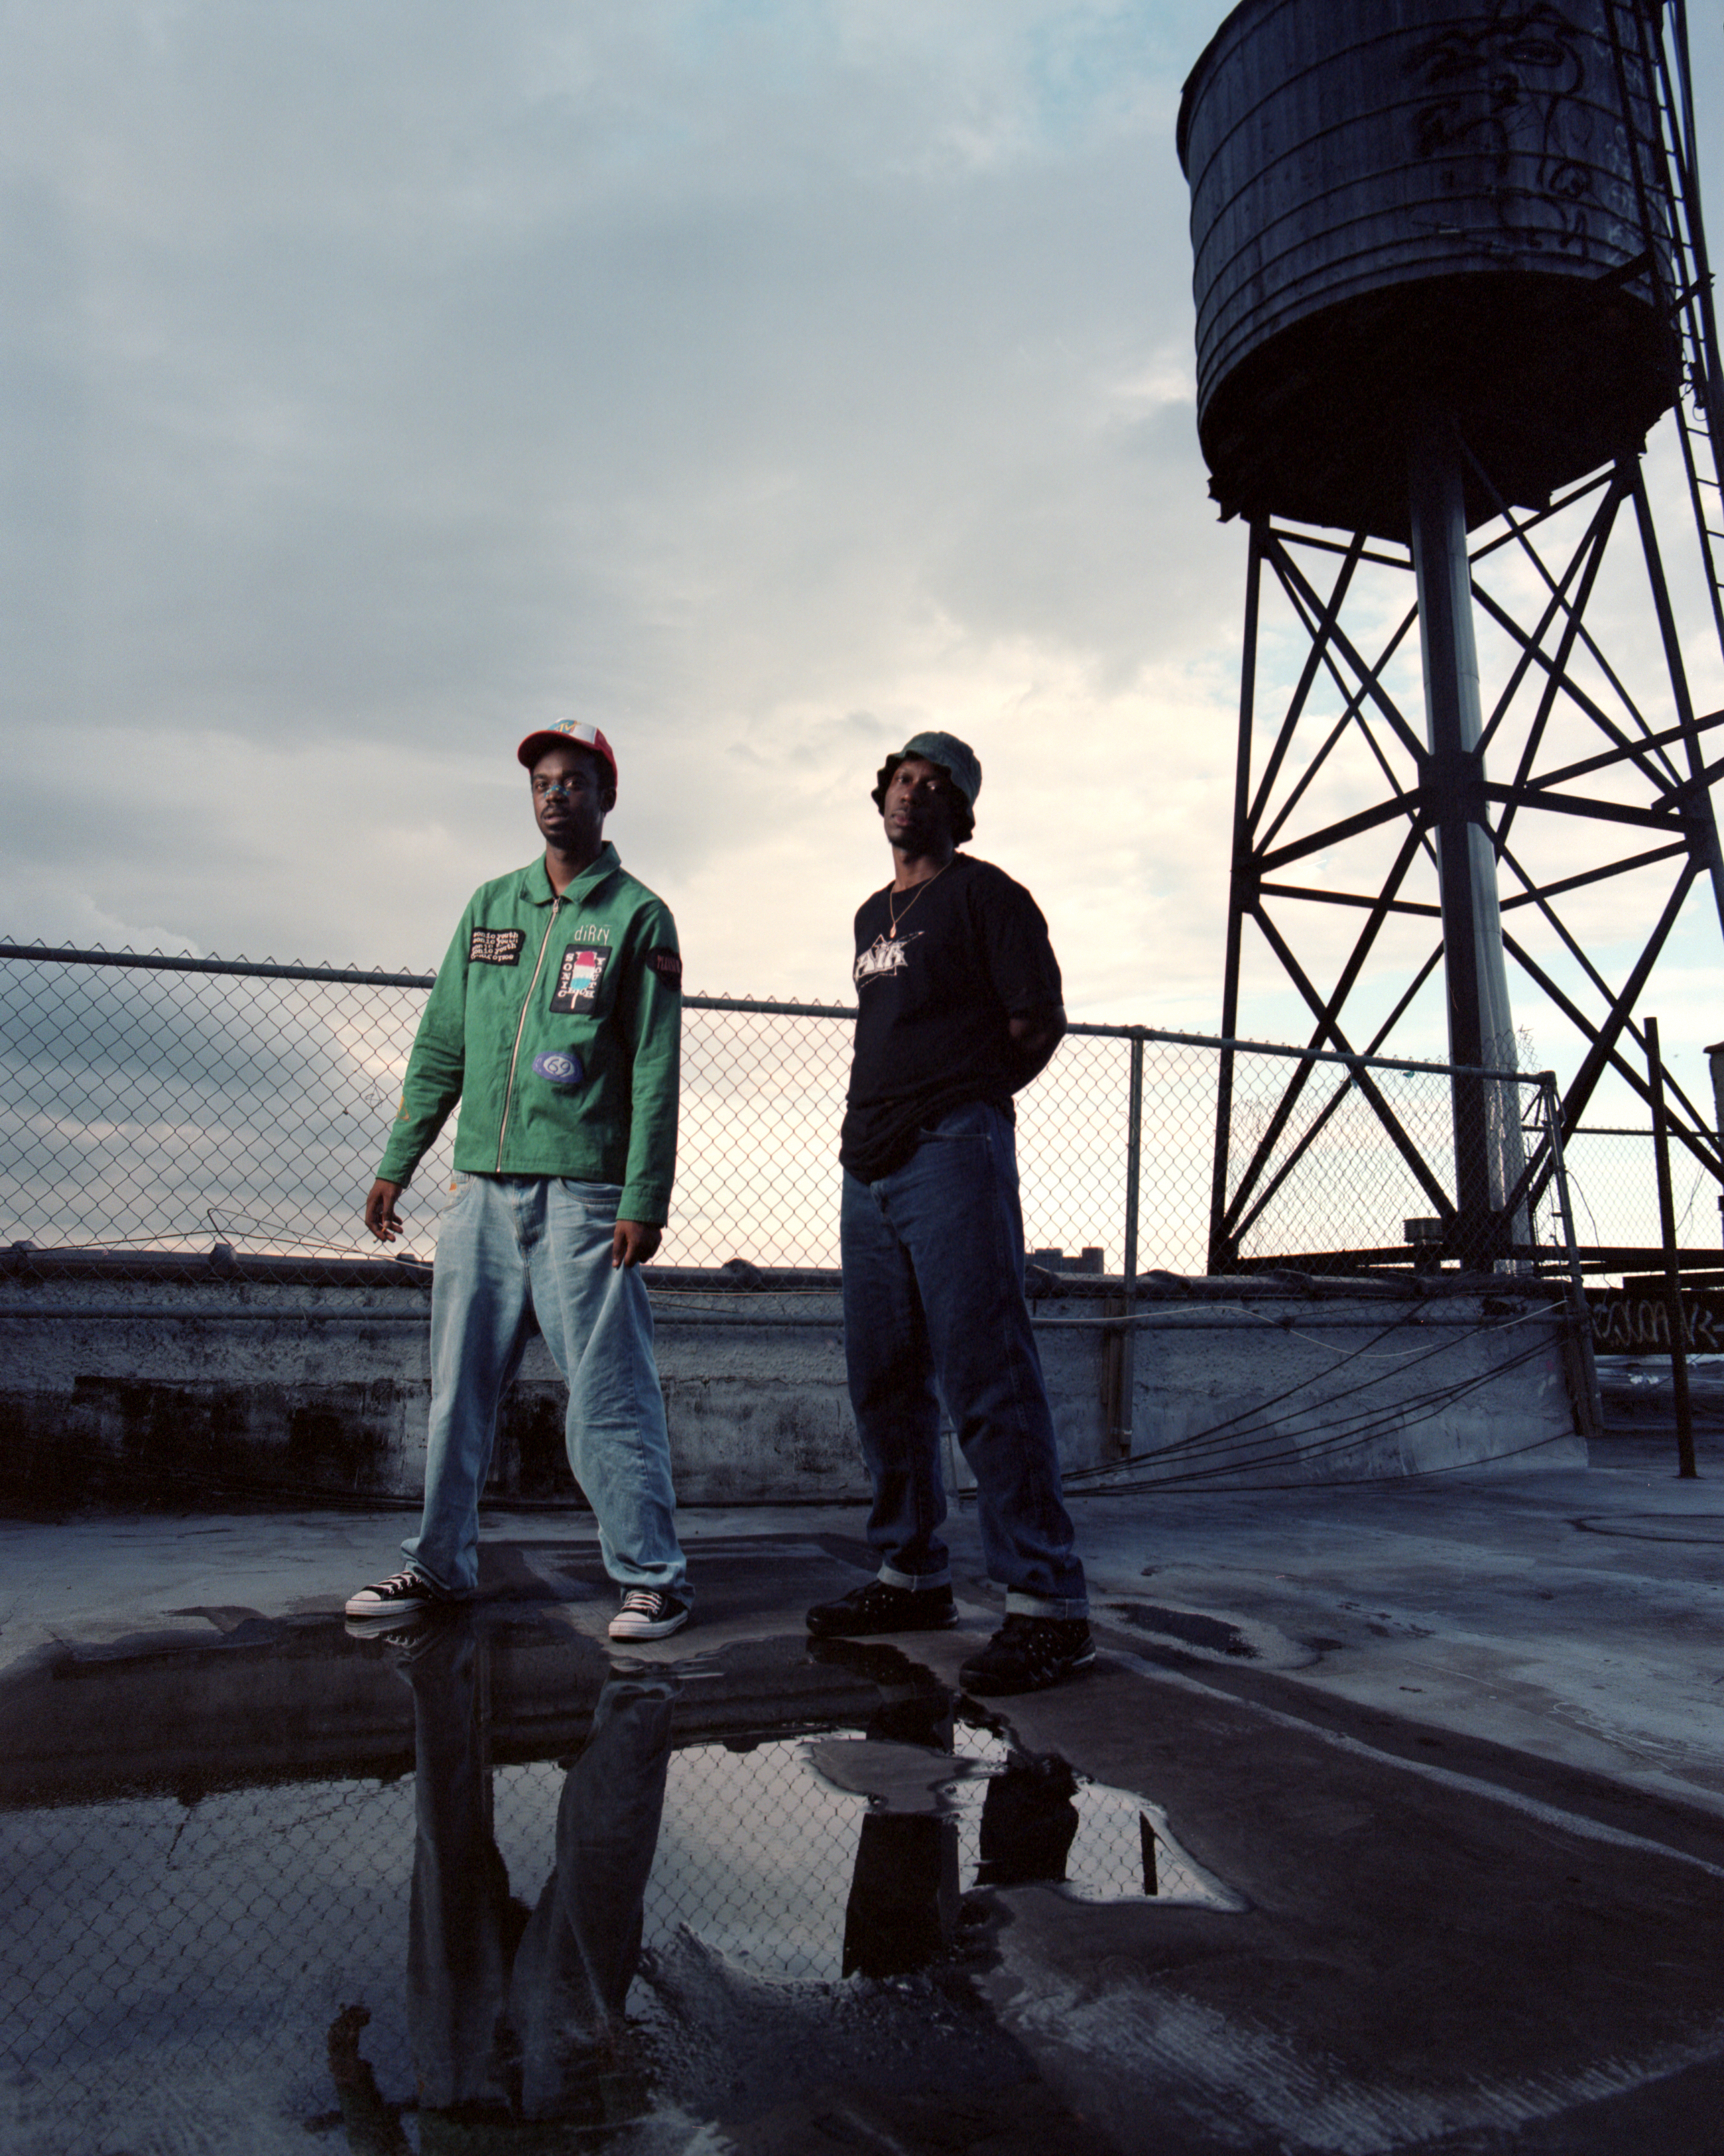 the rap duo paris texas posing for a portrait on a roof